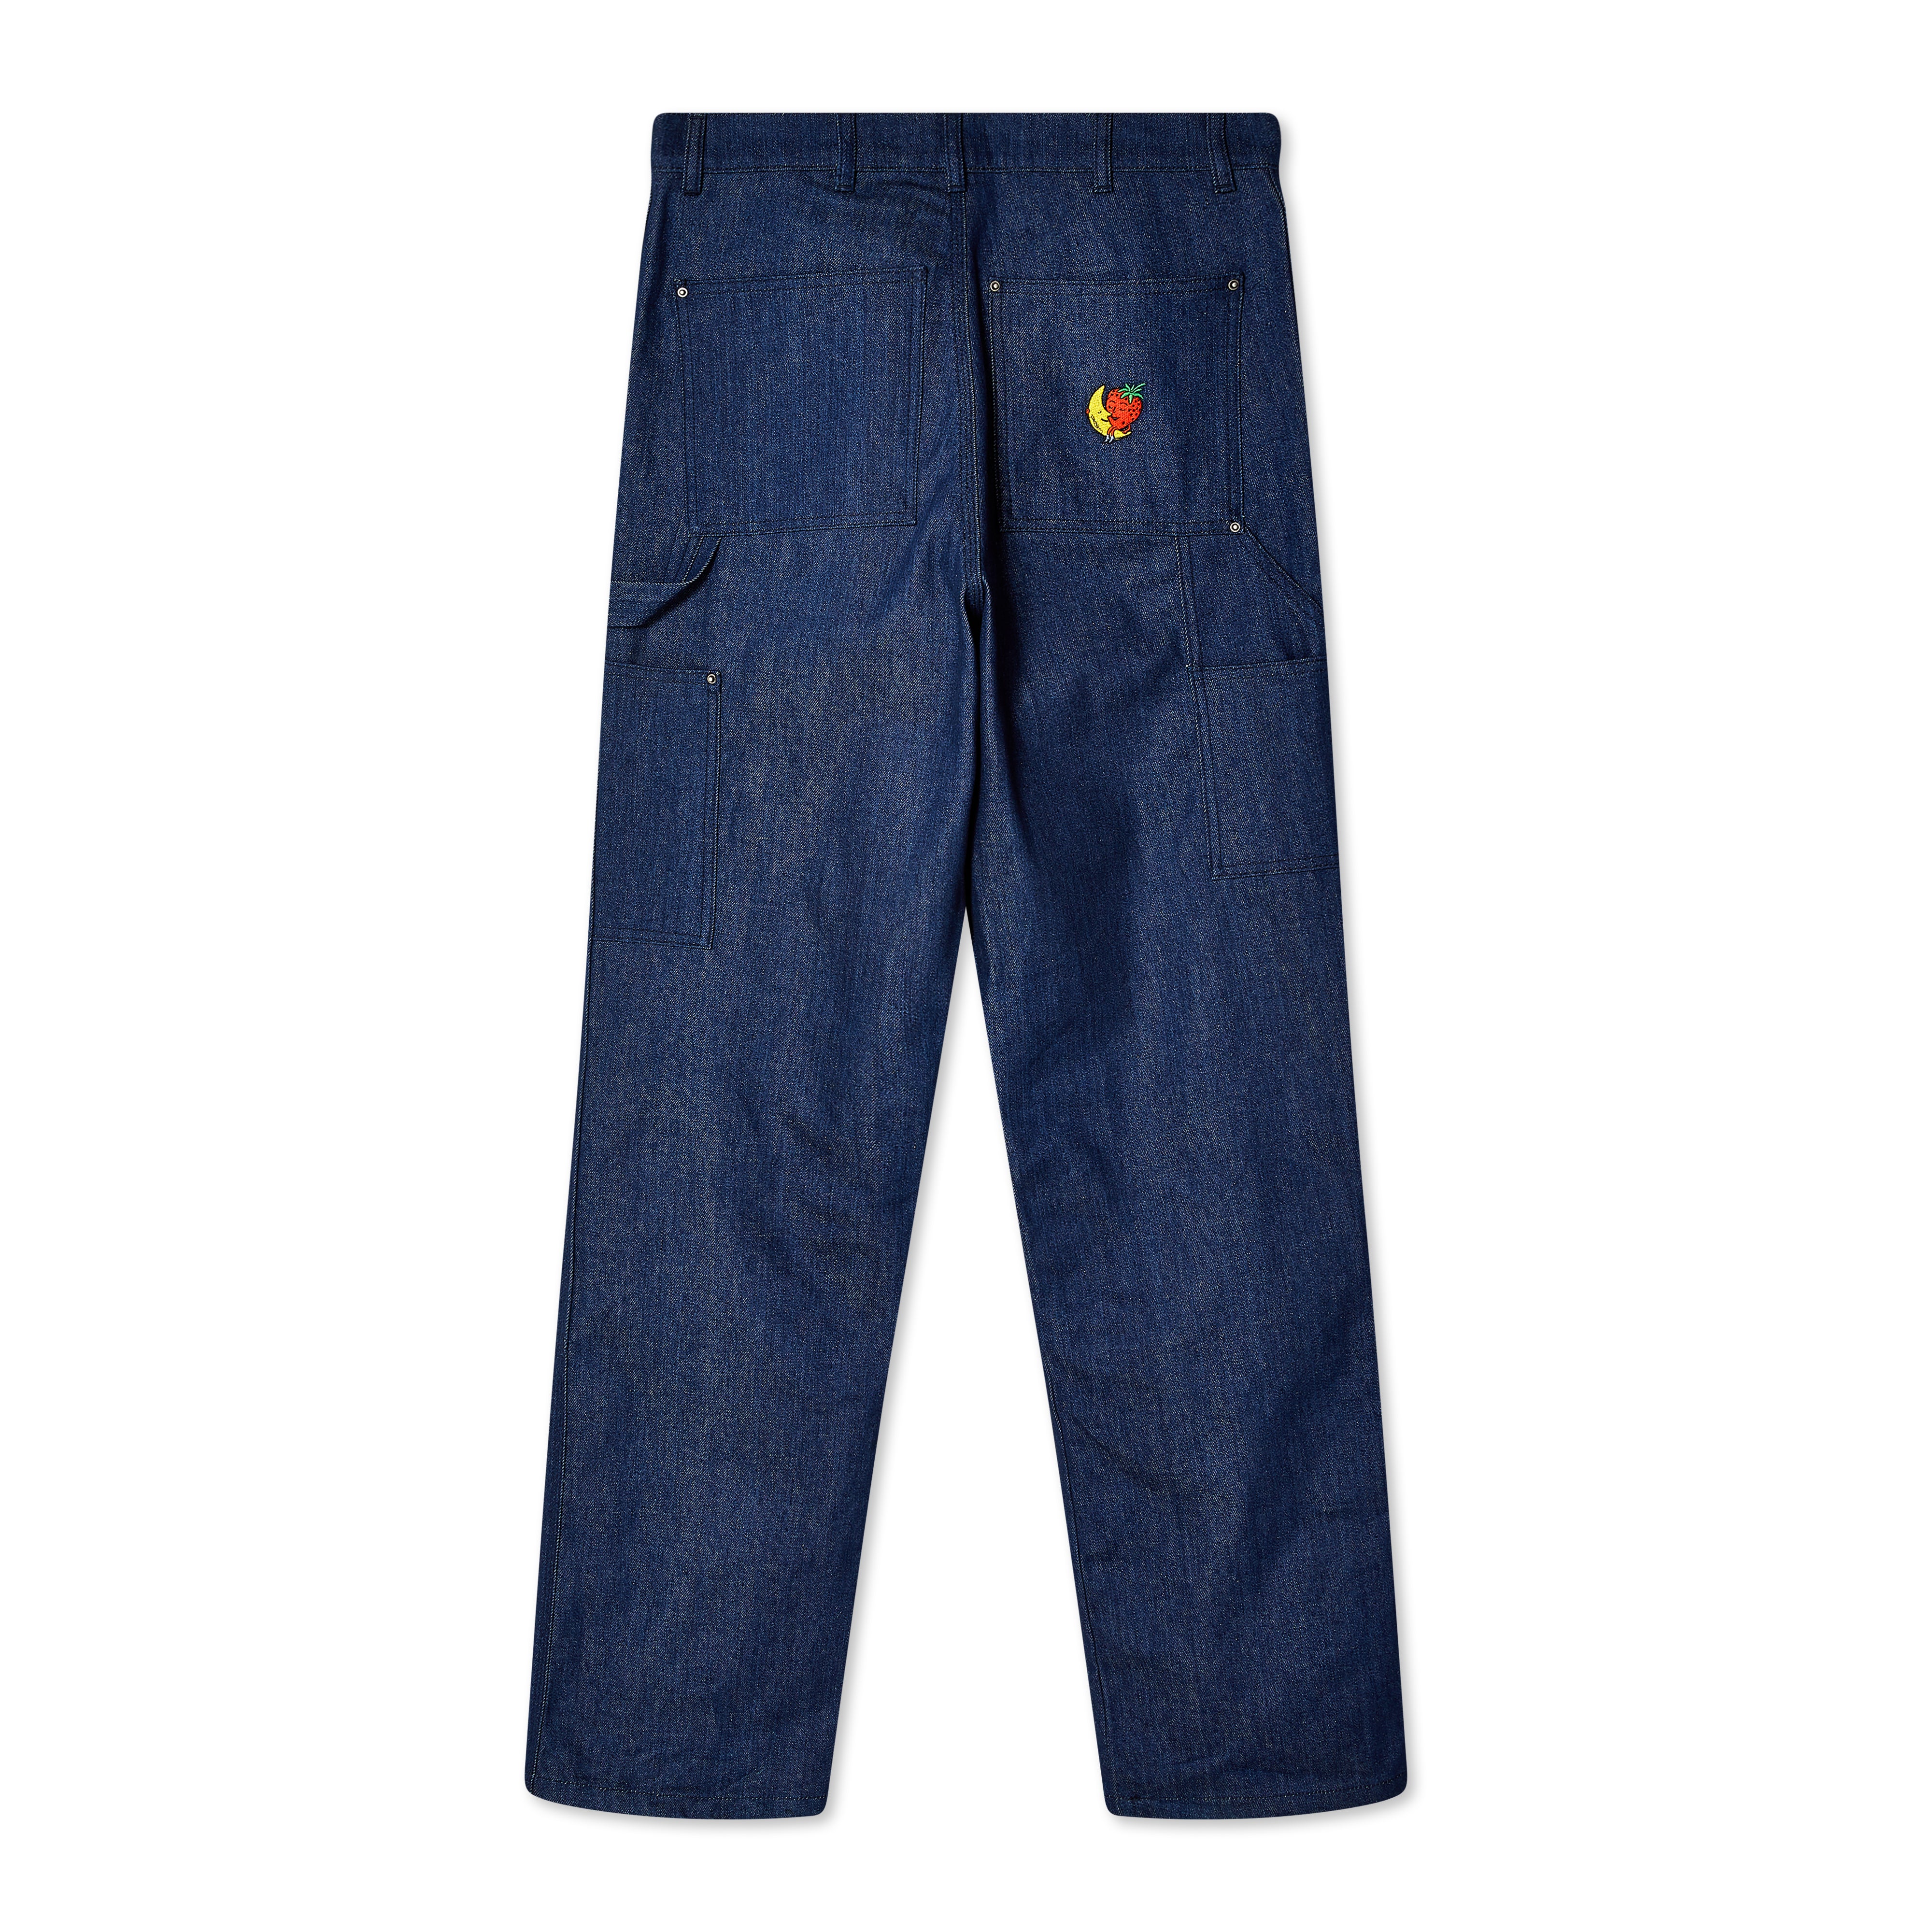 Sky High Farm Workwear - Men's Unisex Denim Double Knee Work Pant - (Blue)